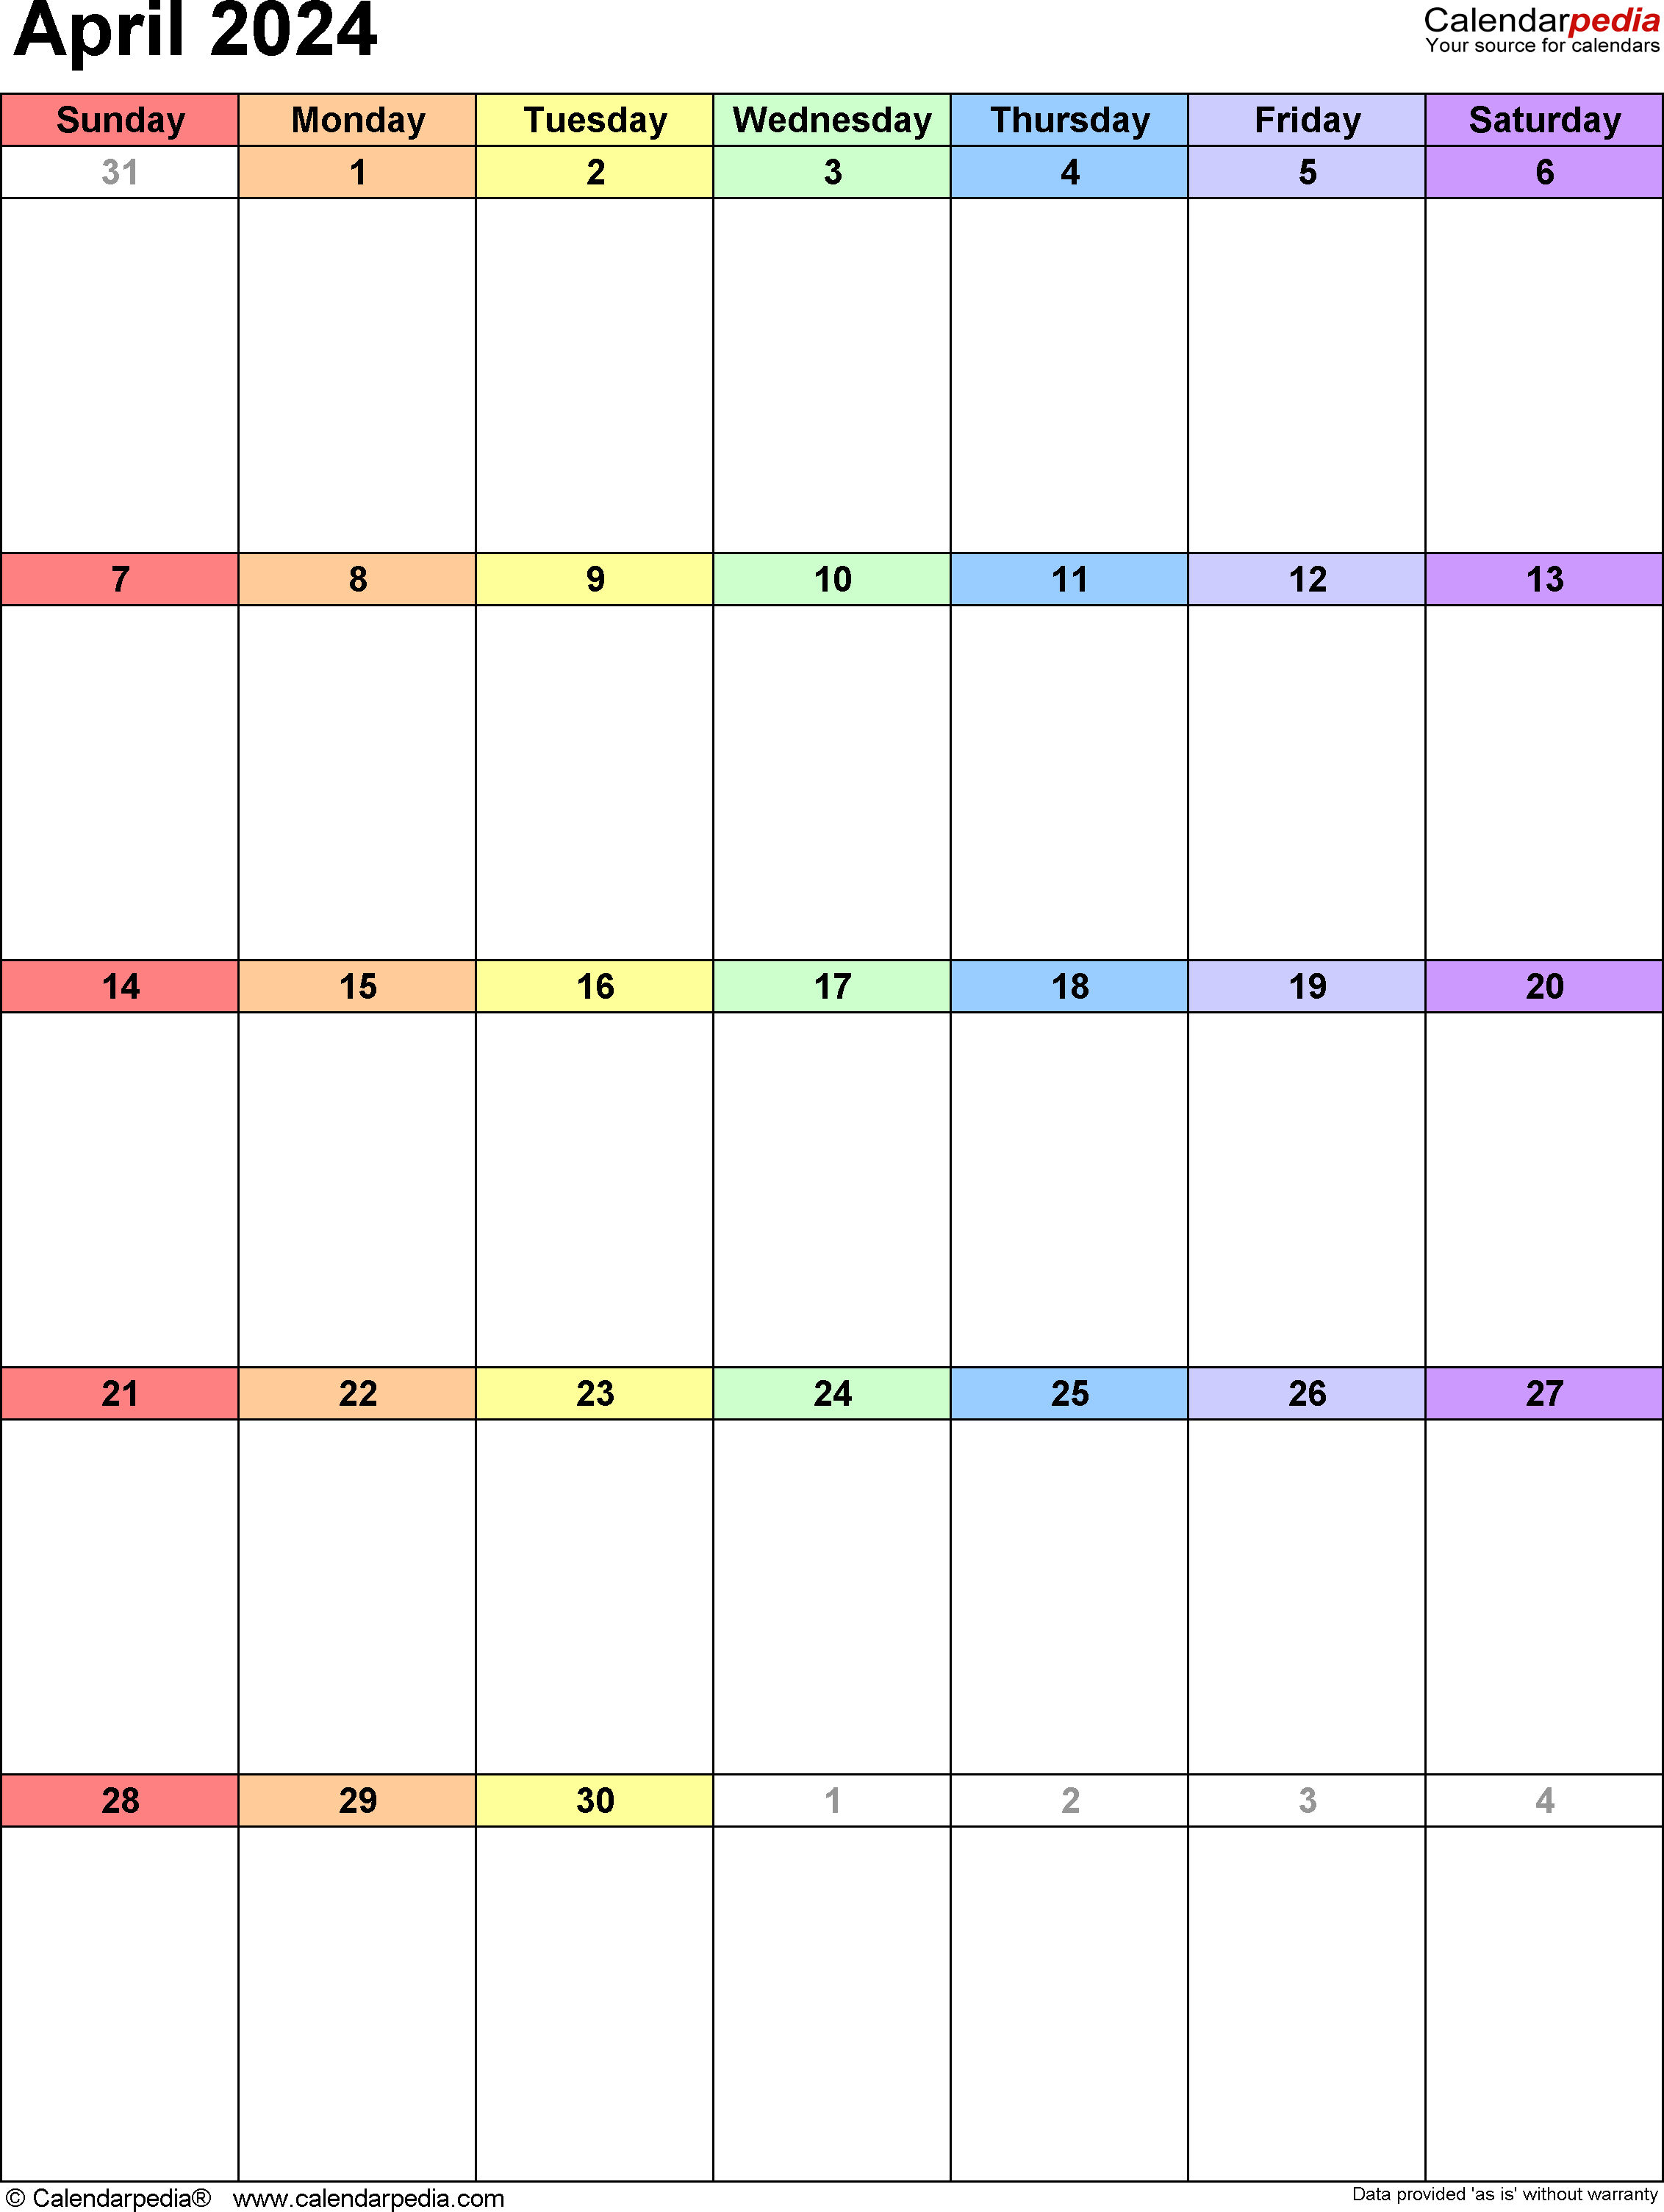 April 2024 Calendar | Templates For Word, Excel And Pdf regarding Free Printable Calendar April 2024 Portrait